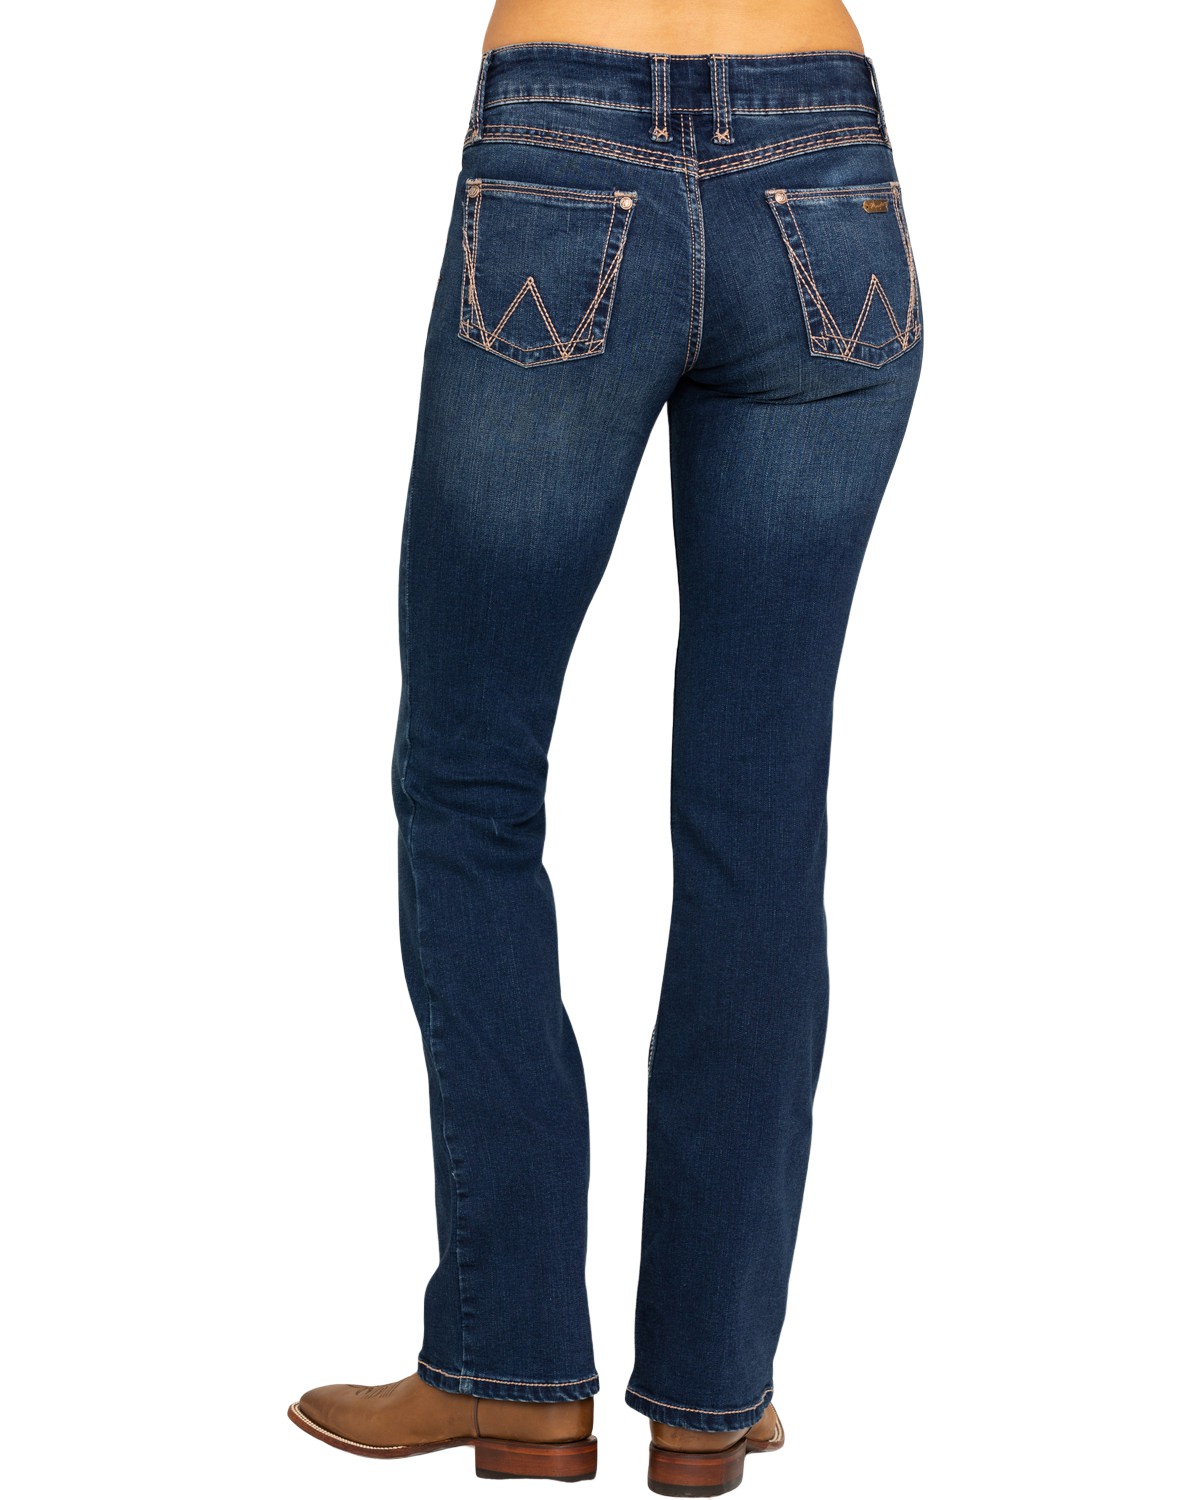 Wrangler Women's Dark Wash Retro Mae Jeans Indigo 9W x 34L - image 1 of 7